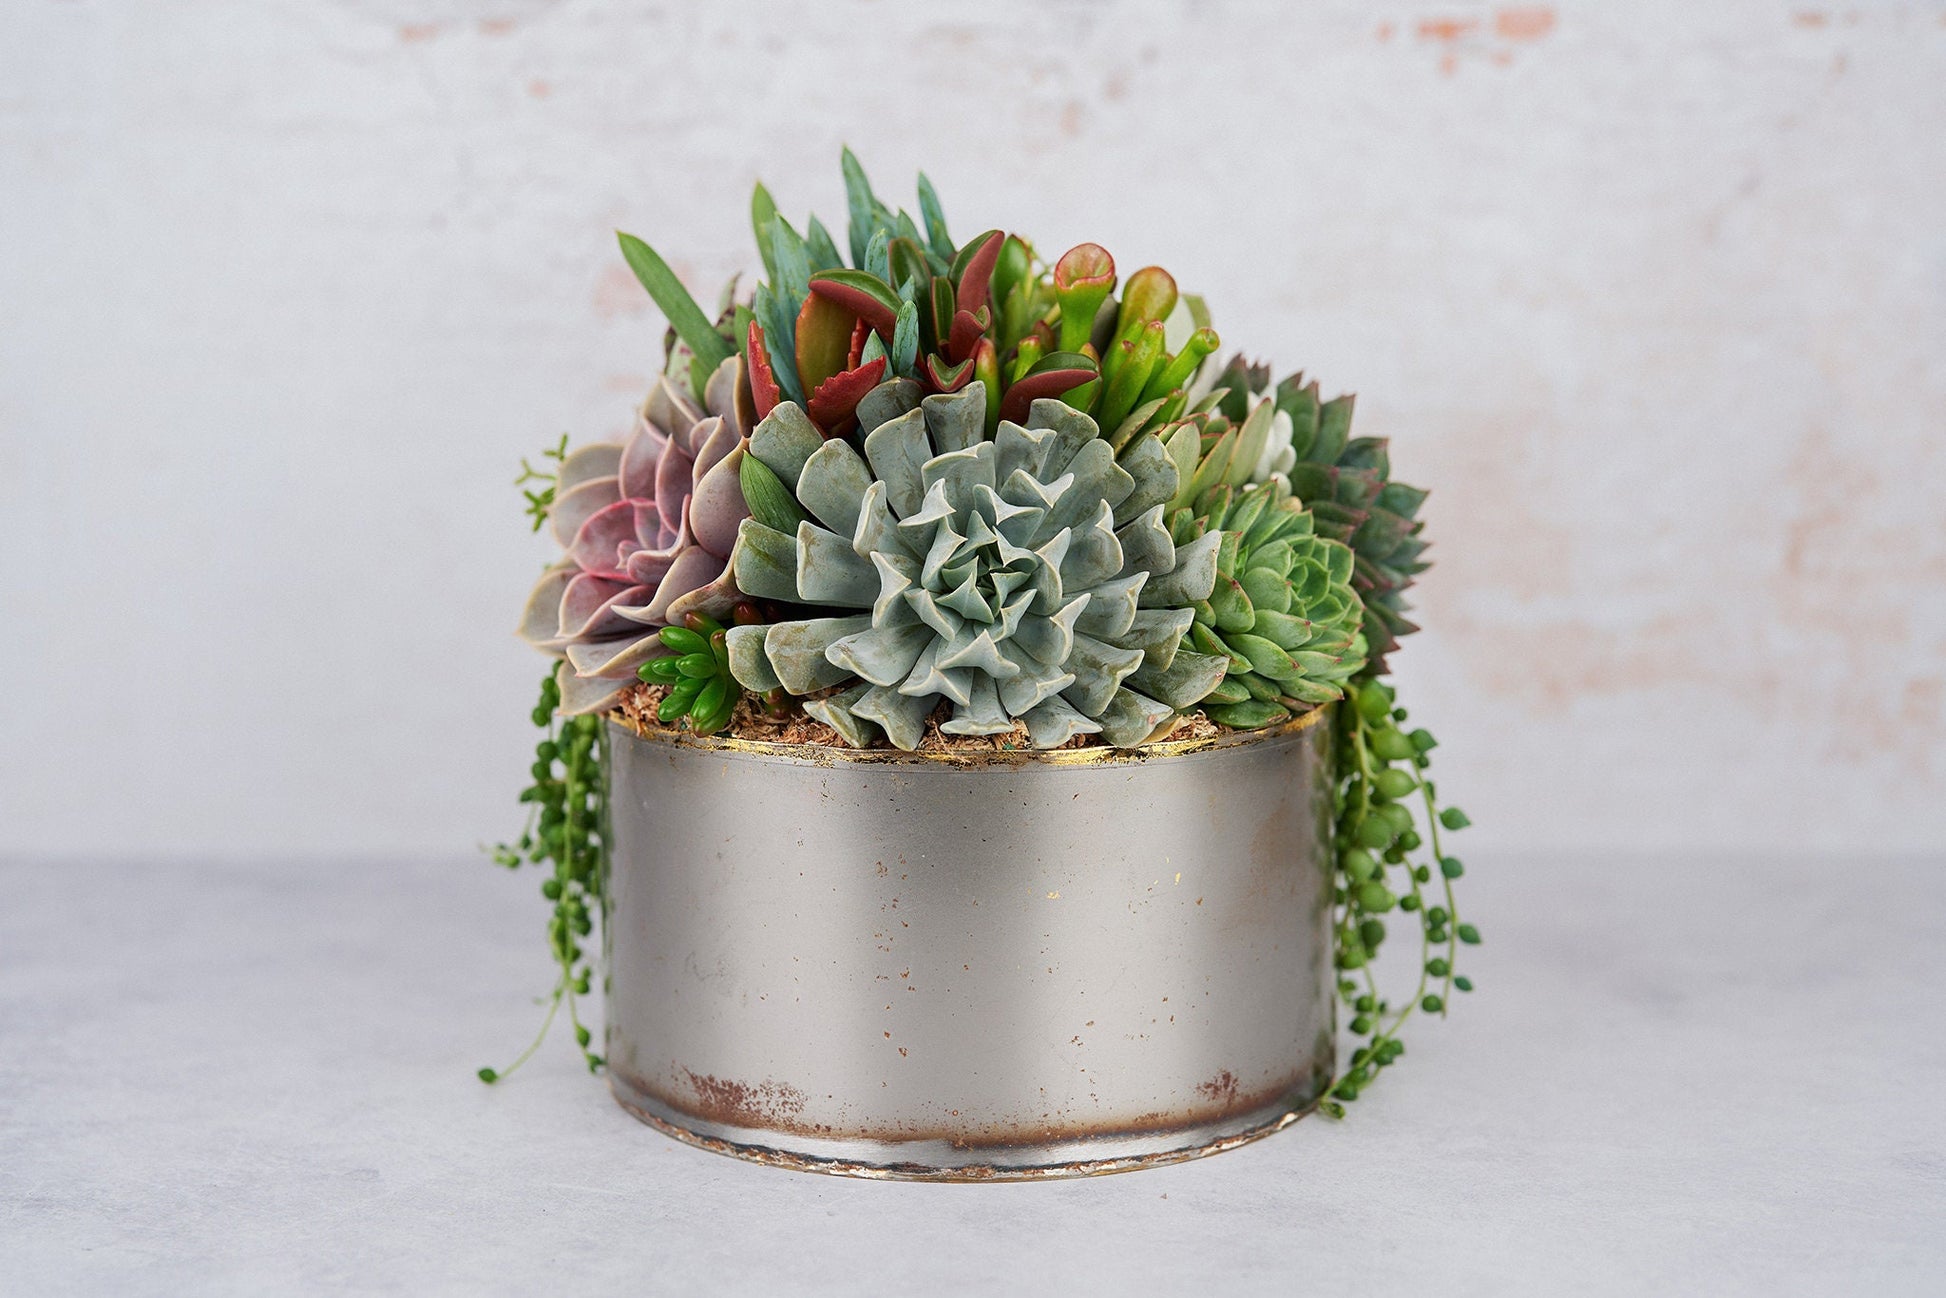 Industrial Metal Bowl Succulent Arrangement Planter: Modern Living Succulent Gift, Centerpiece for Weddings & Events, Housewarming Gift